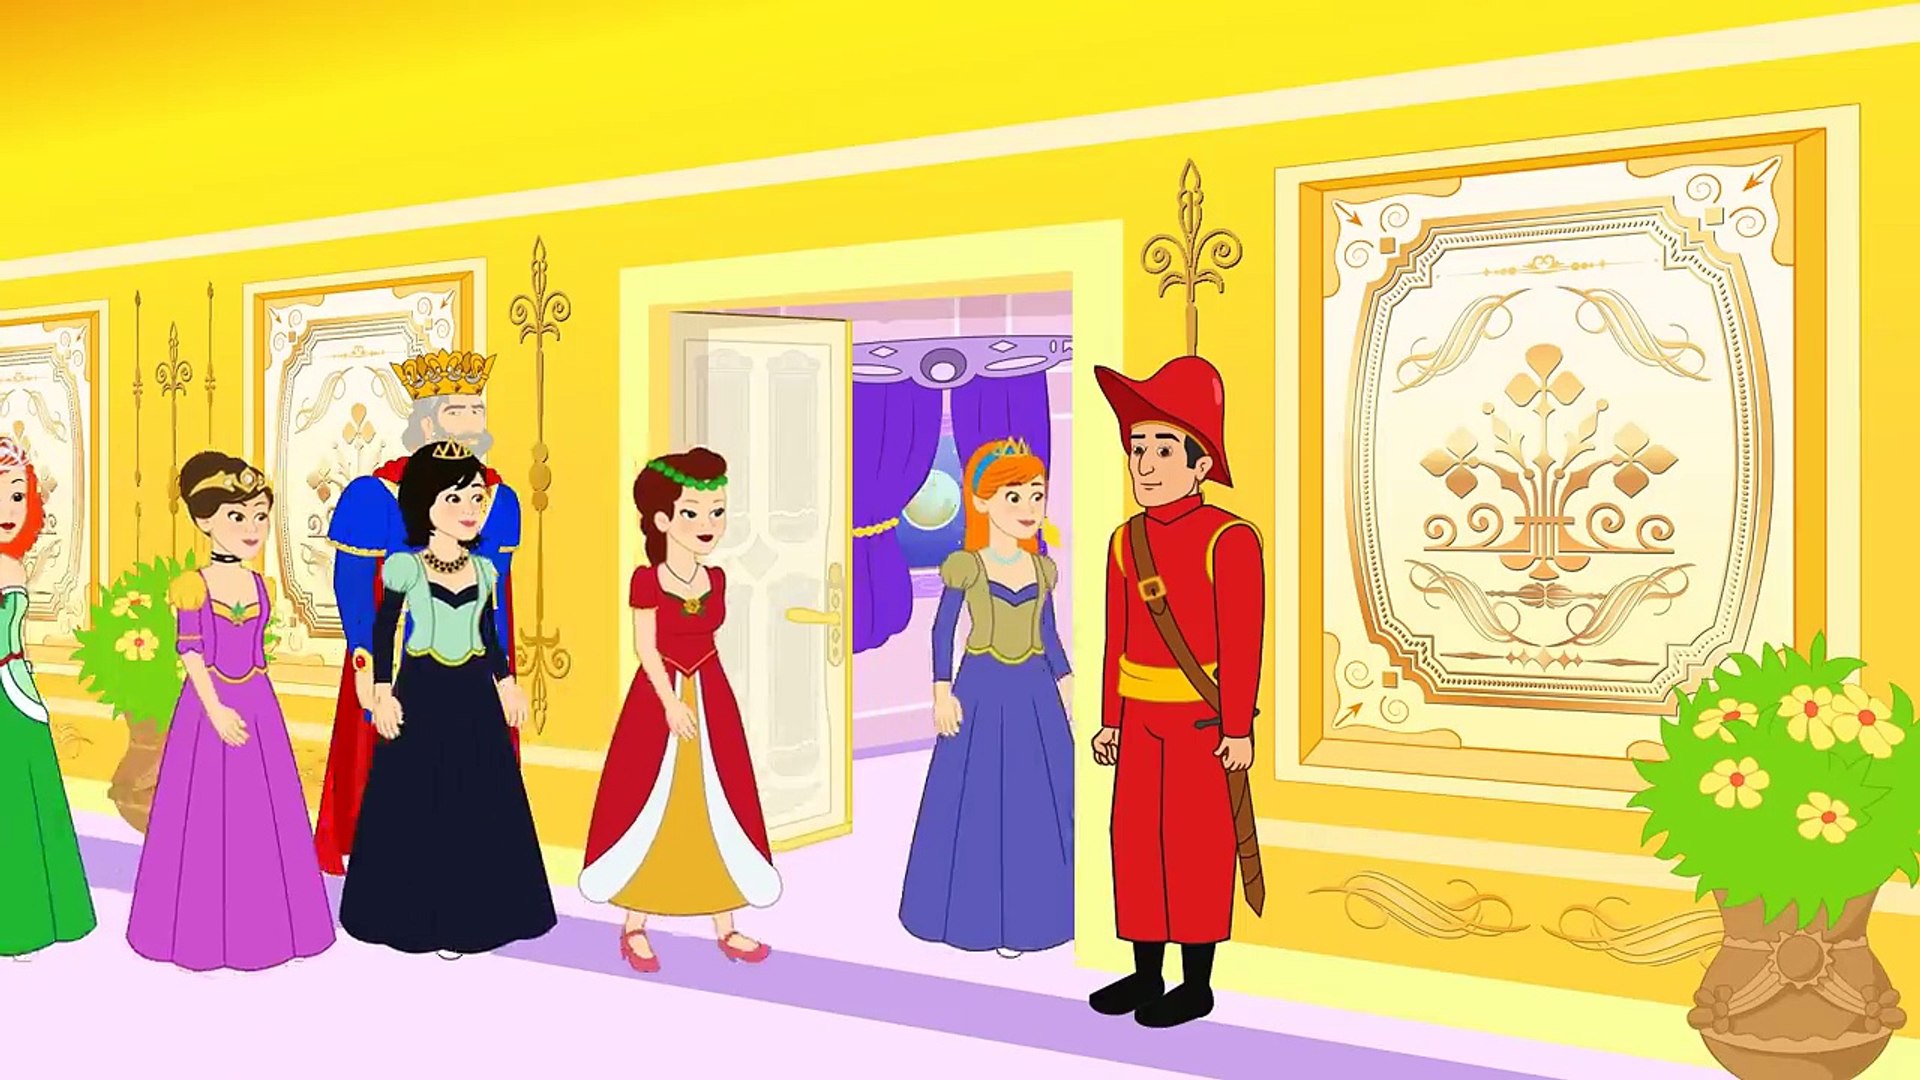 12 Dancing Princesses Kids Story | Bedtime Stories - Dailymotion Video